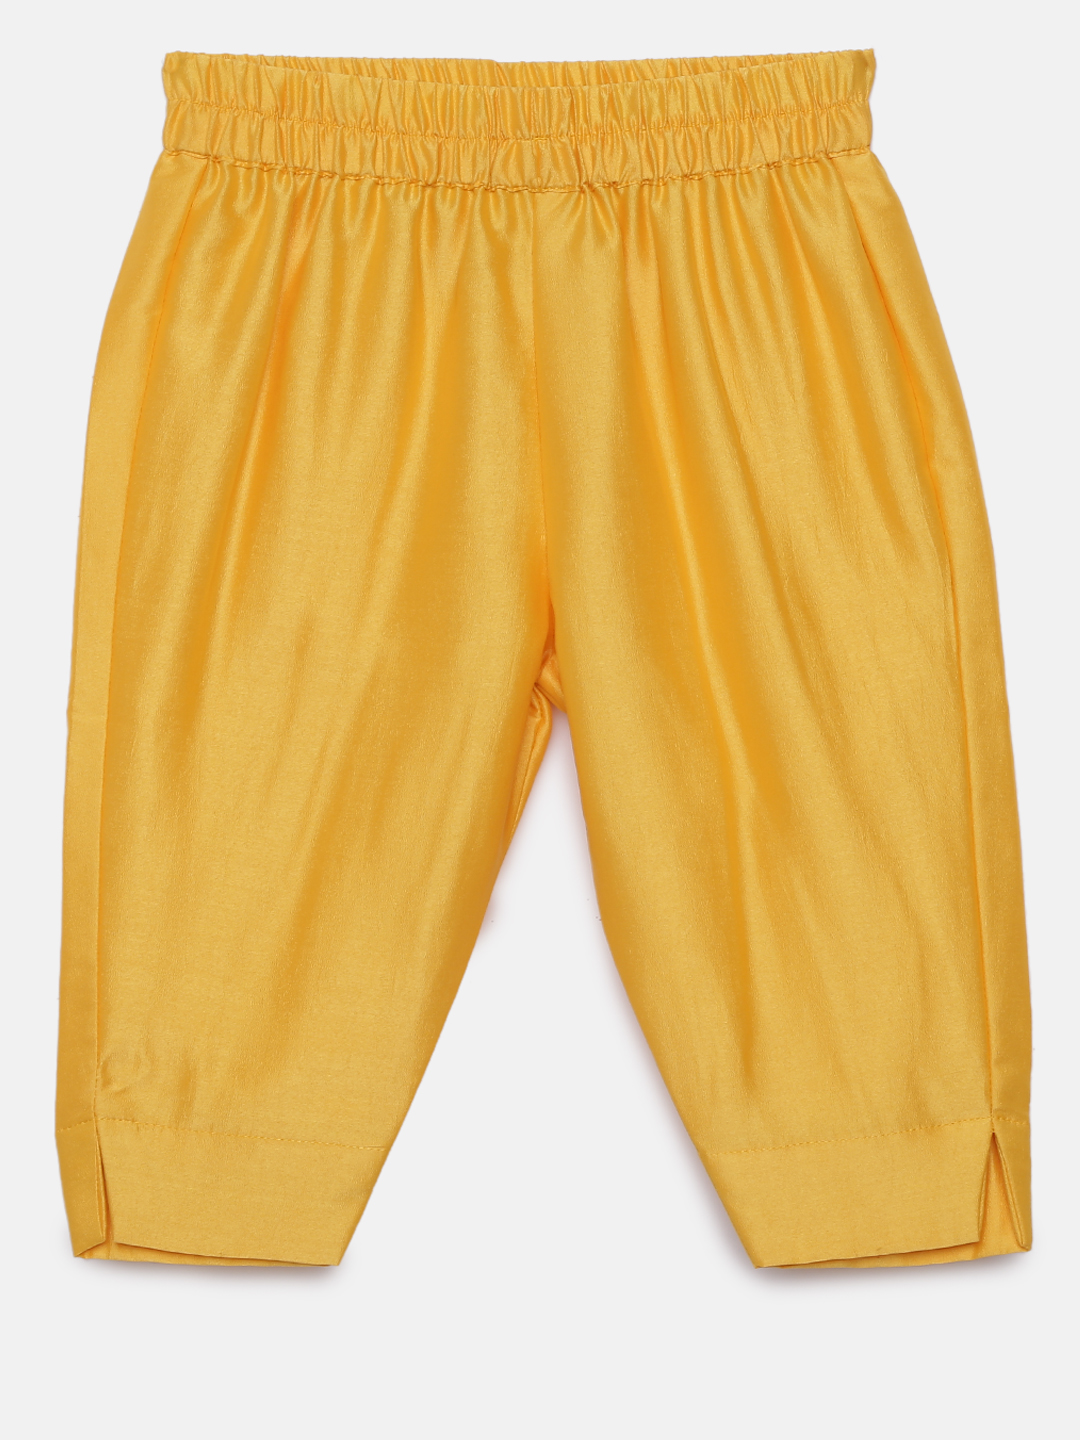 6 2 One shoulder yellow ruffle kurta with pants